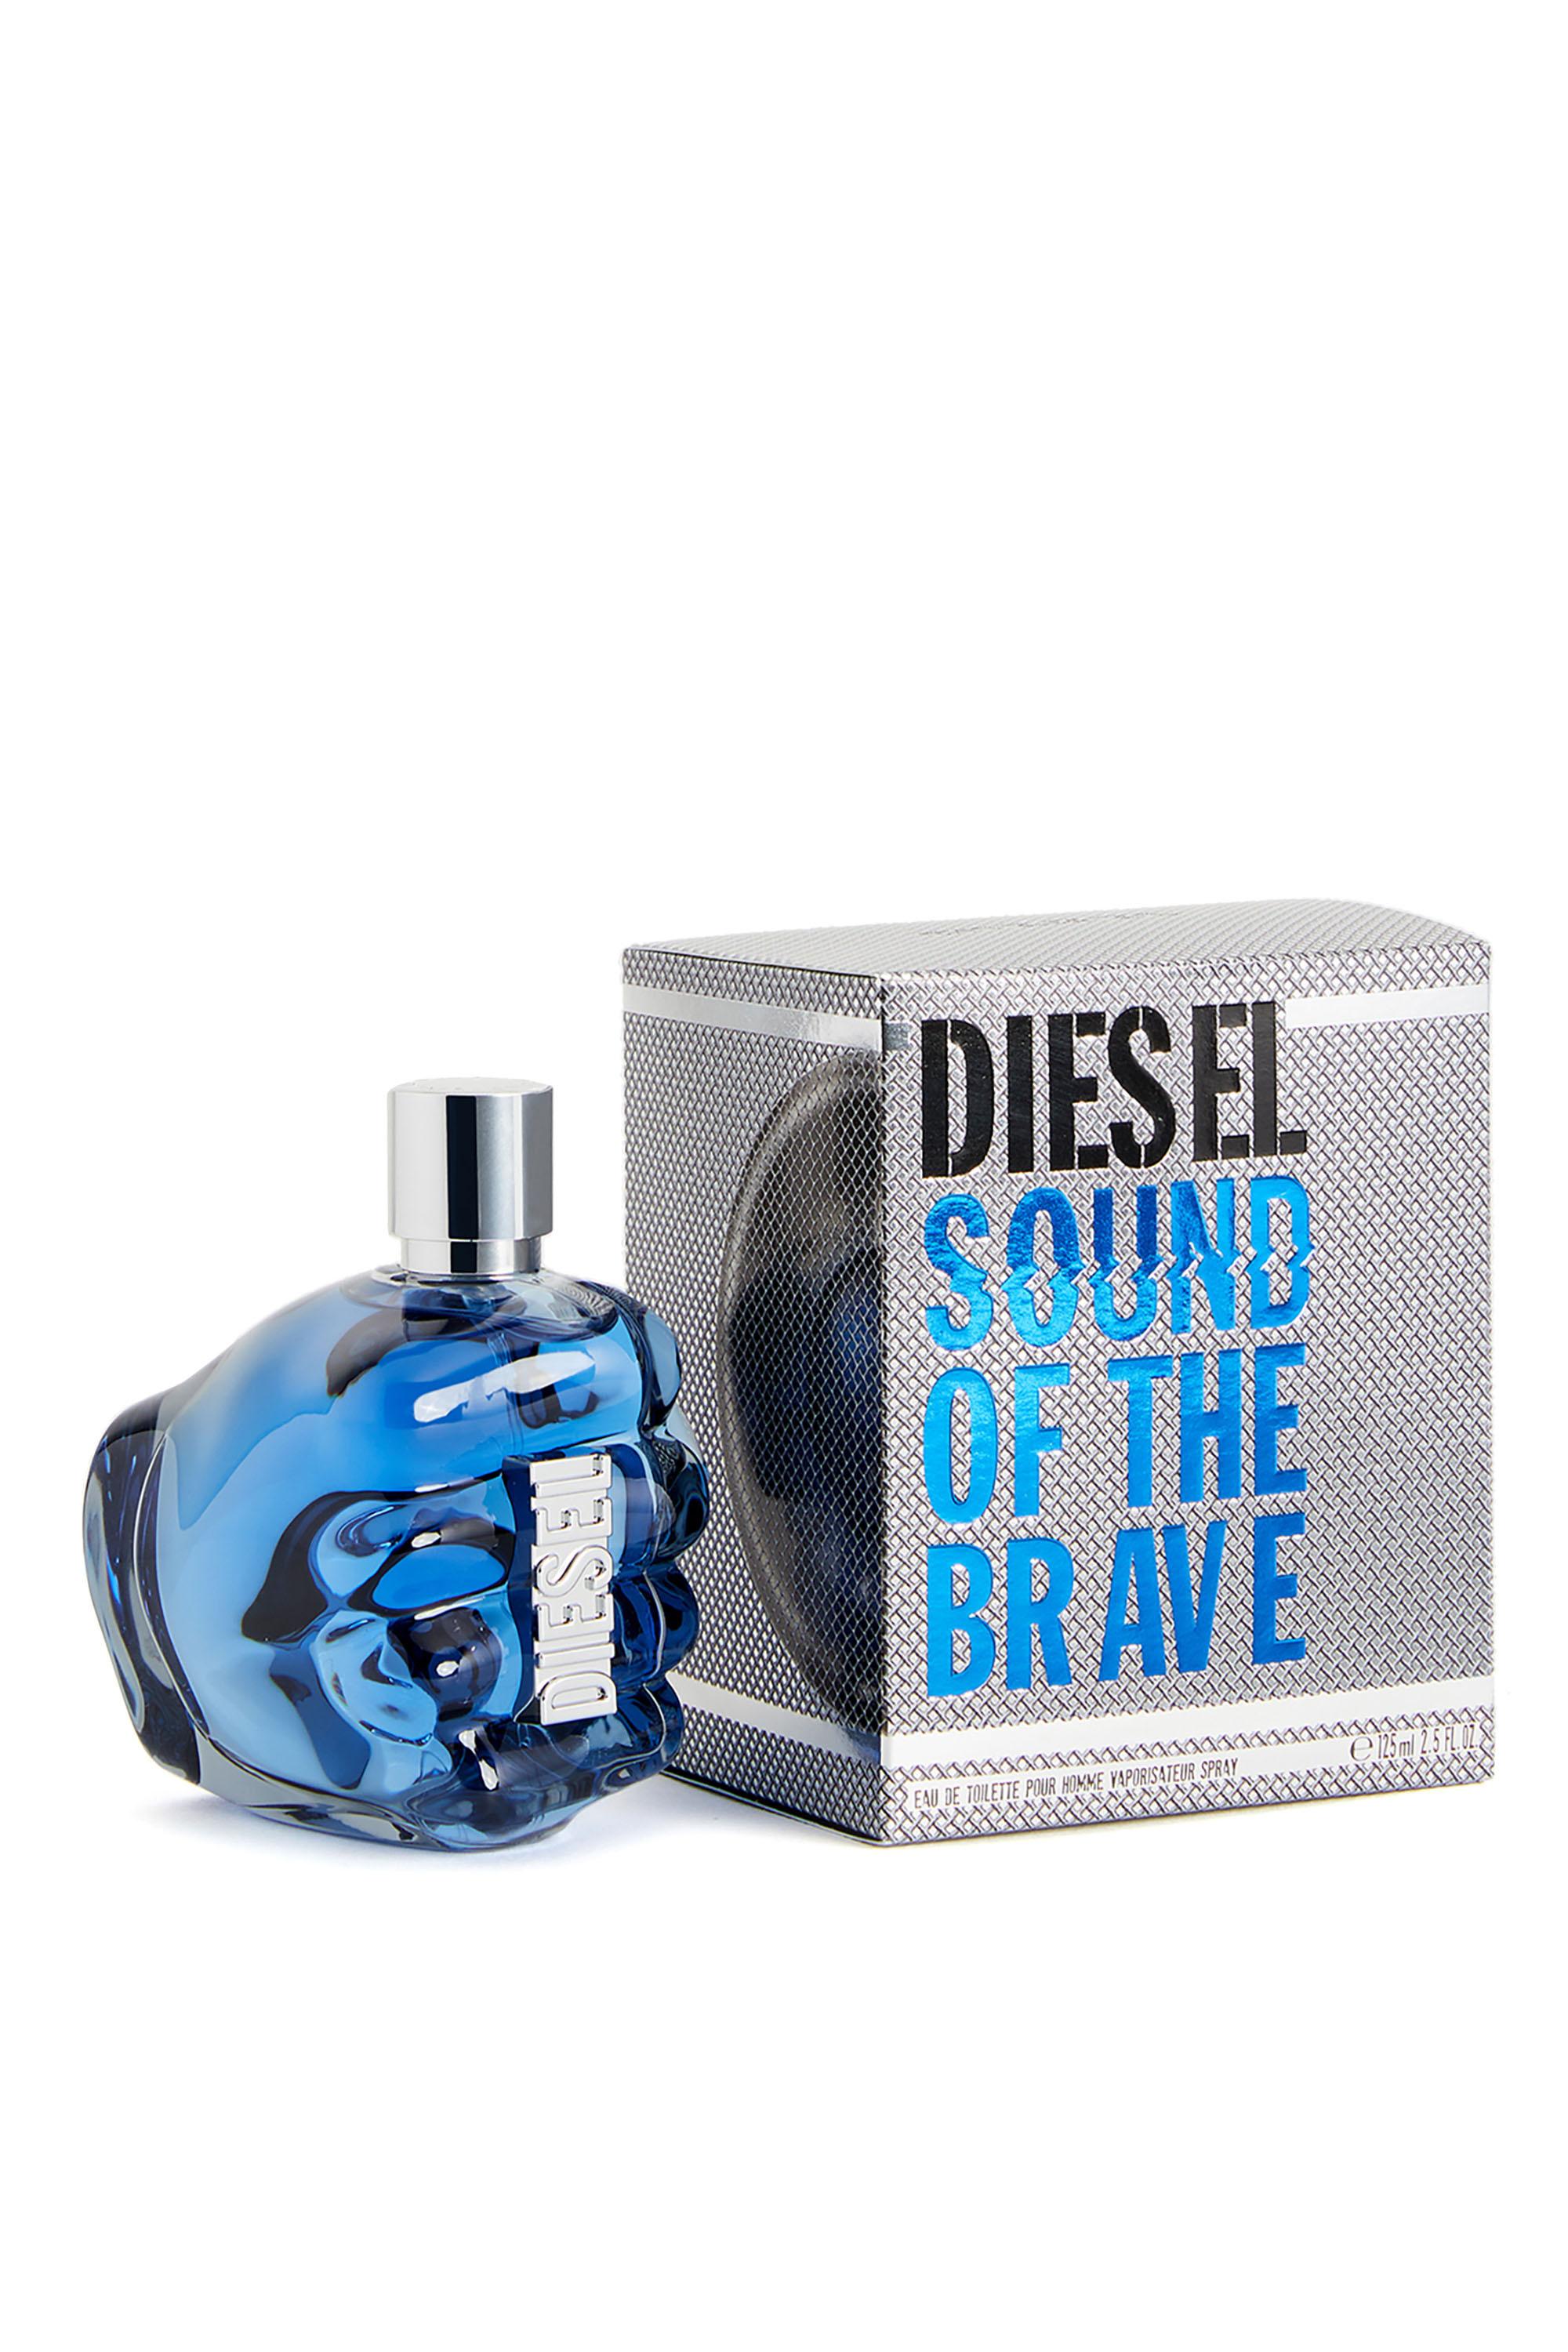 Diesel - SOUND OF THE BRAVE 125ML, Blau - Image 2